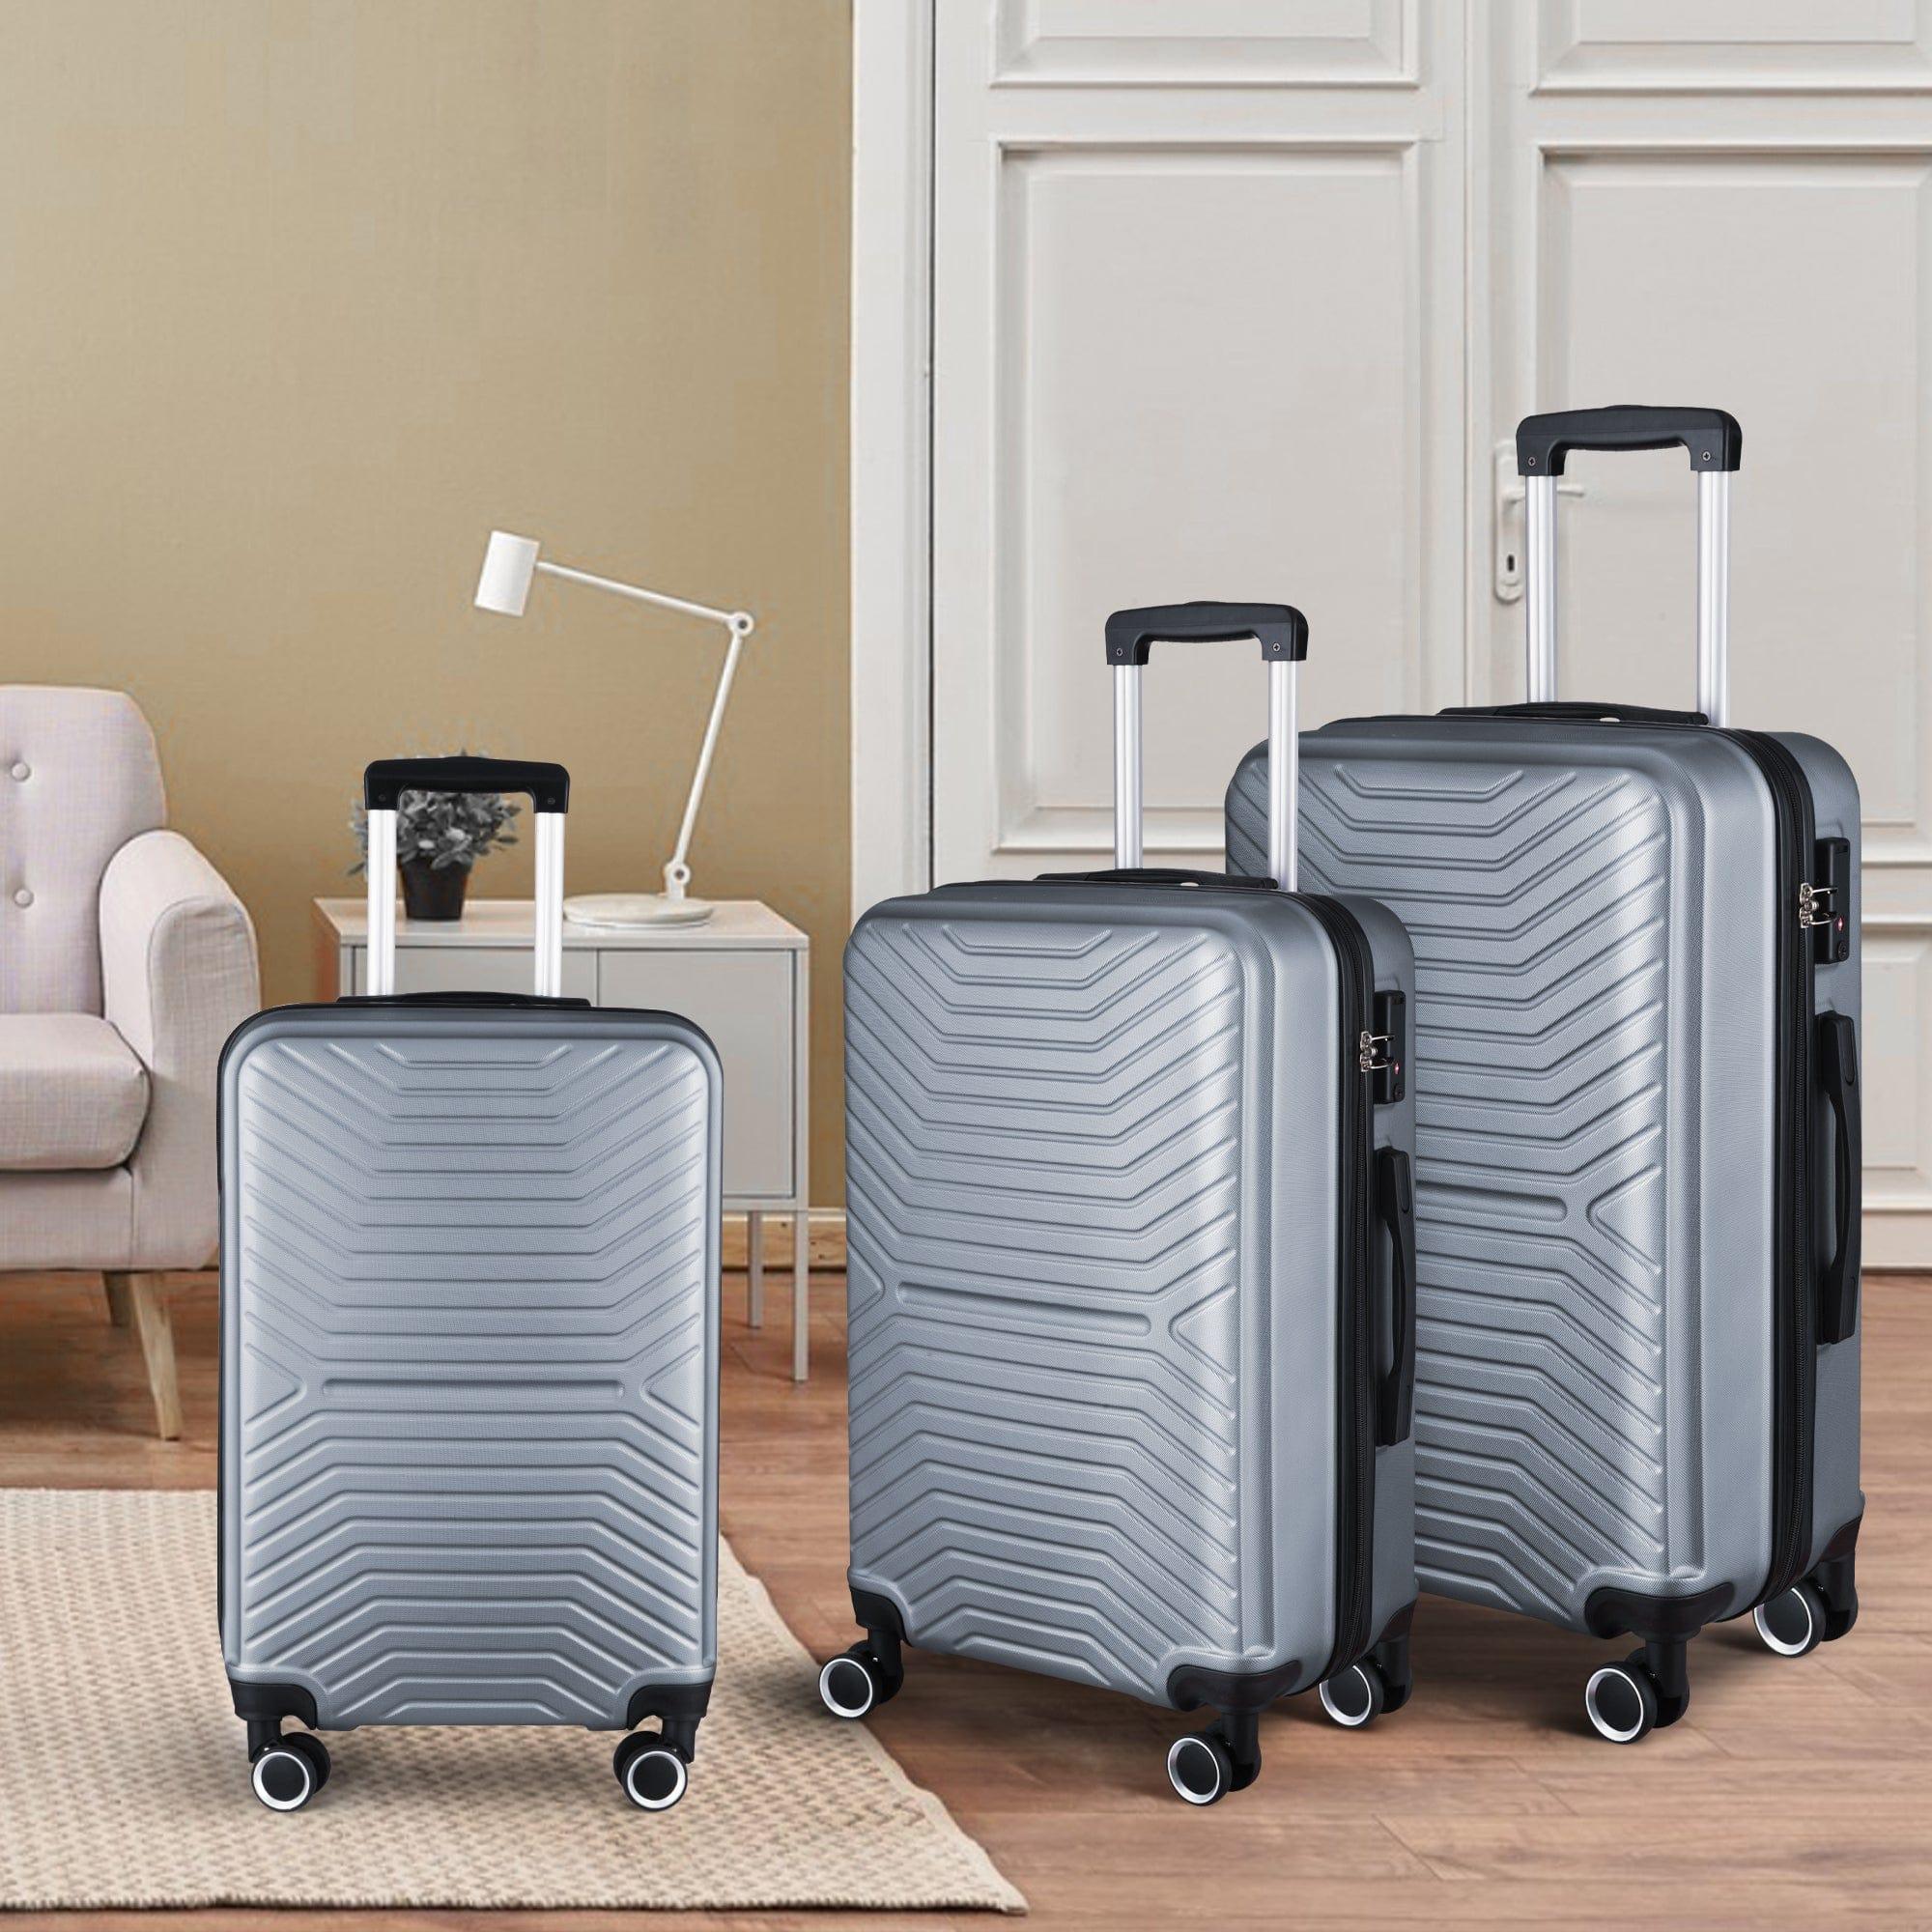 Shop Atacama Siver Expandable Luggage Set Mademoiselle Home Decor